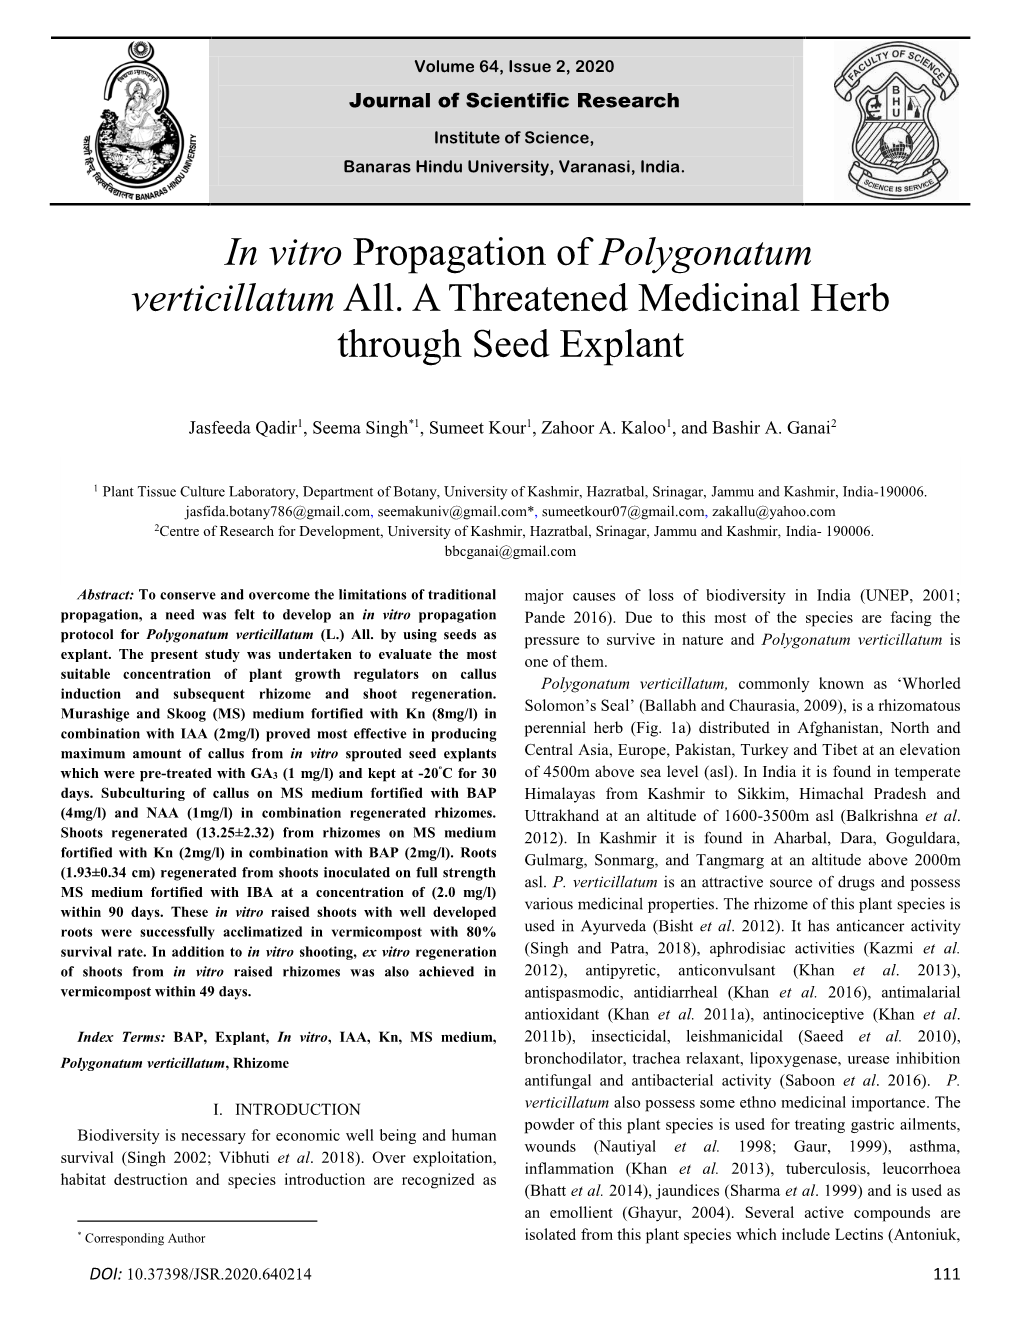 In Vitro Propagation of Polygonatum Verticillatum All. a Threatened Medicinal Herb Through Seed Explant